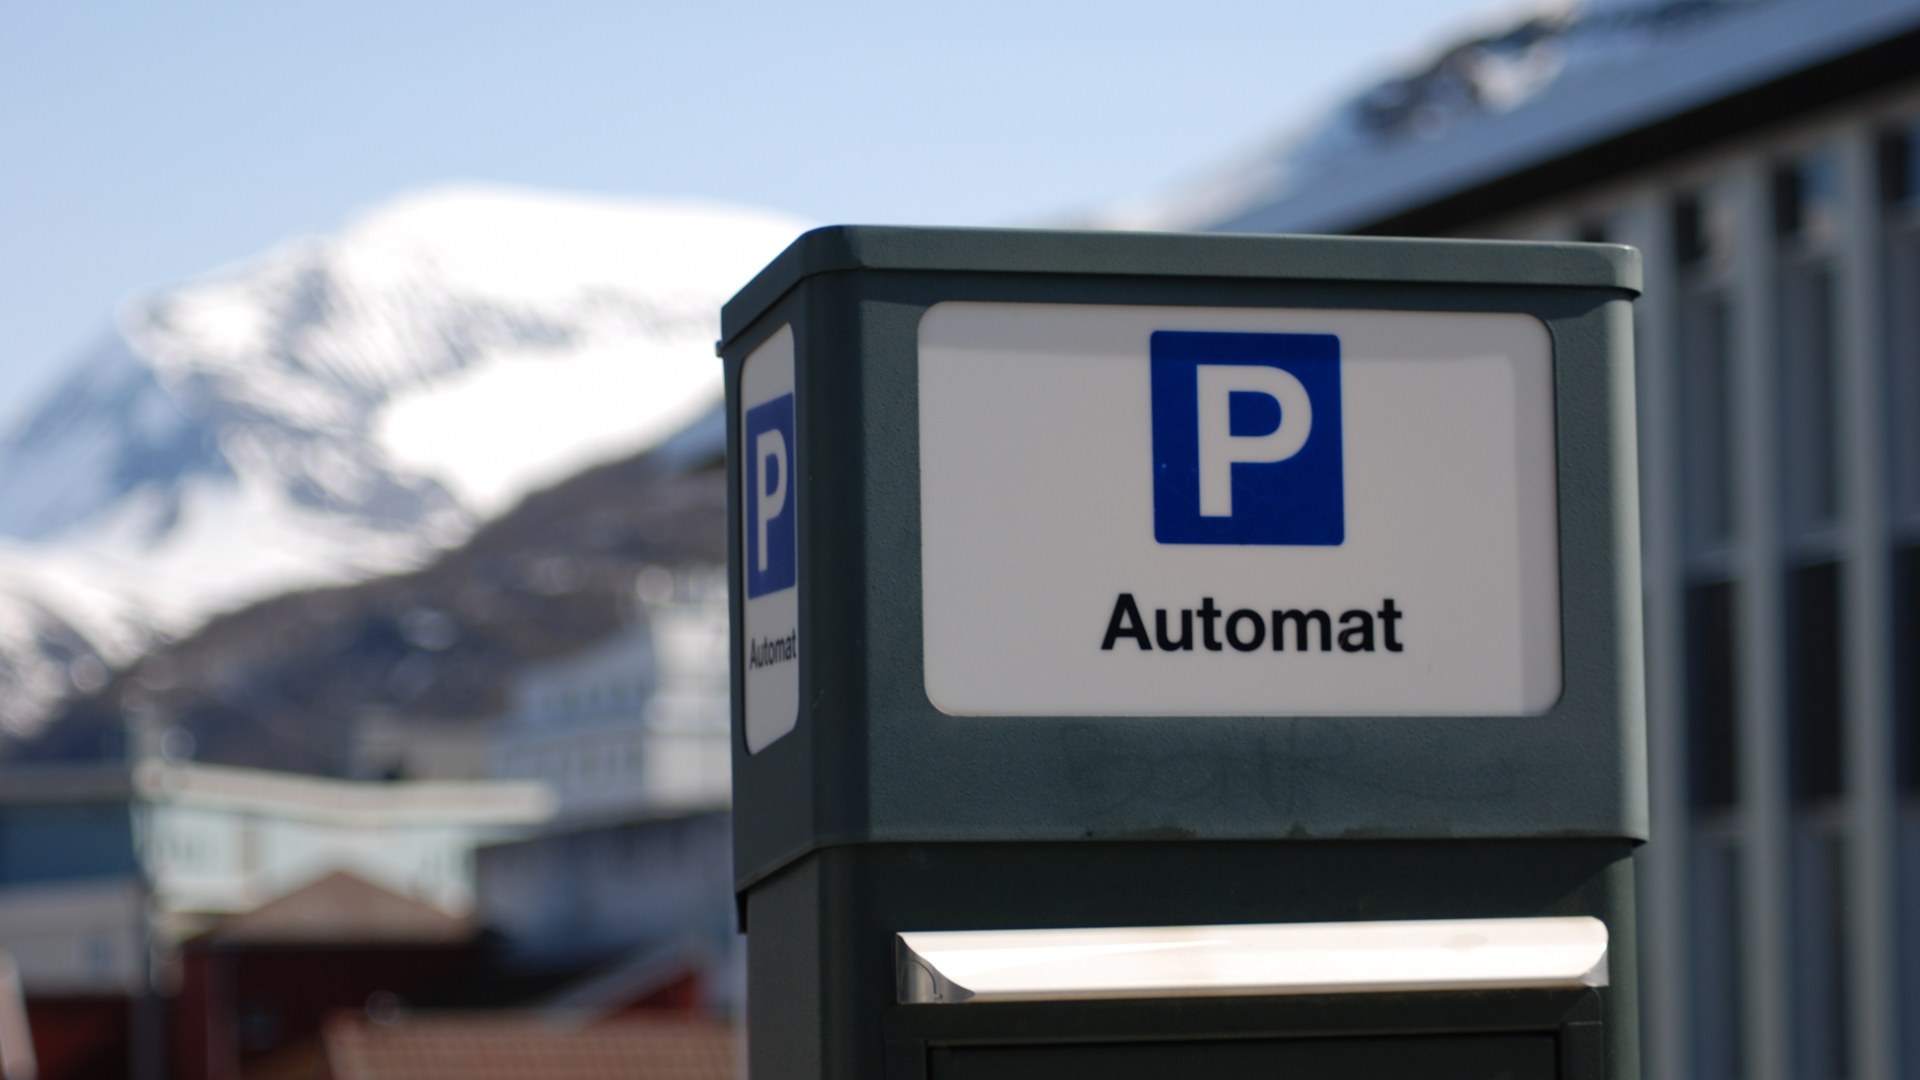 Parking machine in Tromsø city centre